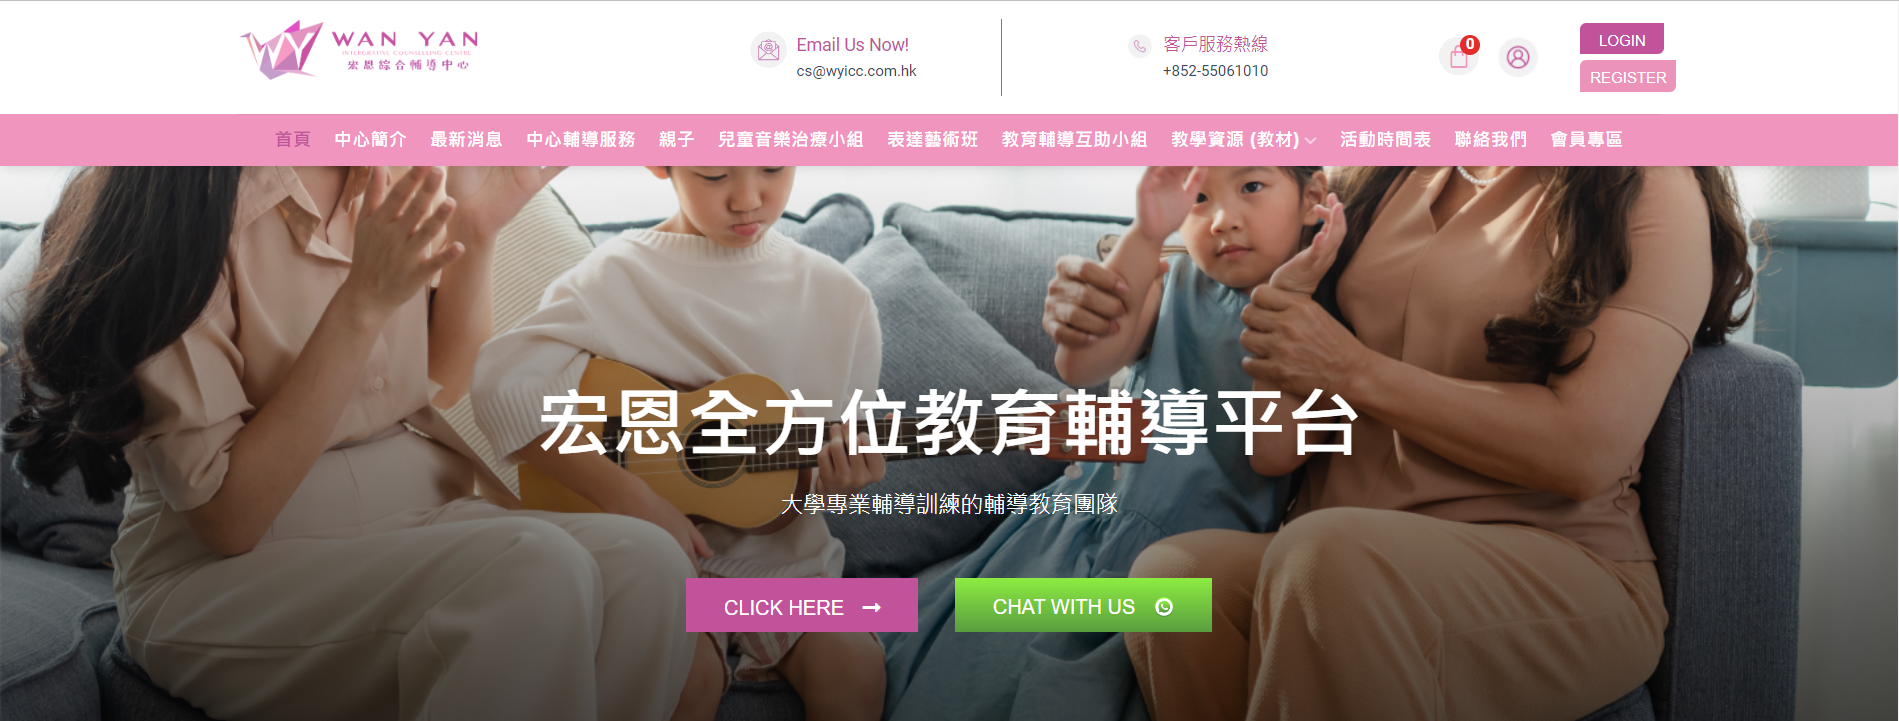 wan-yan-online-educational-counselling-platform.png